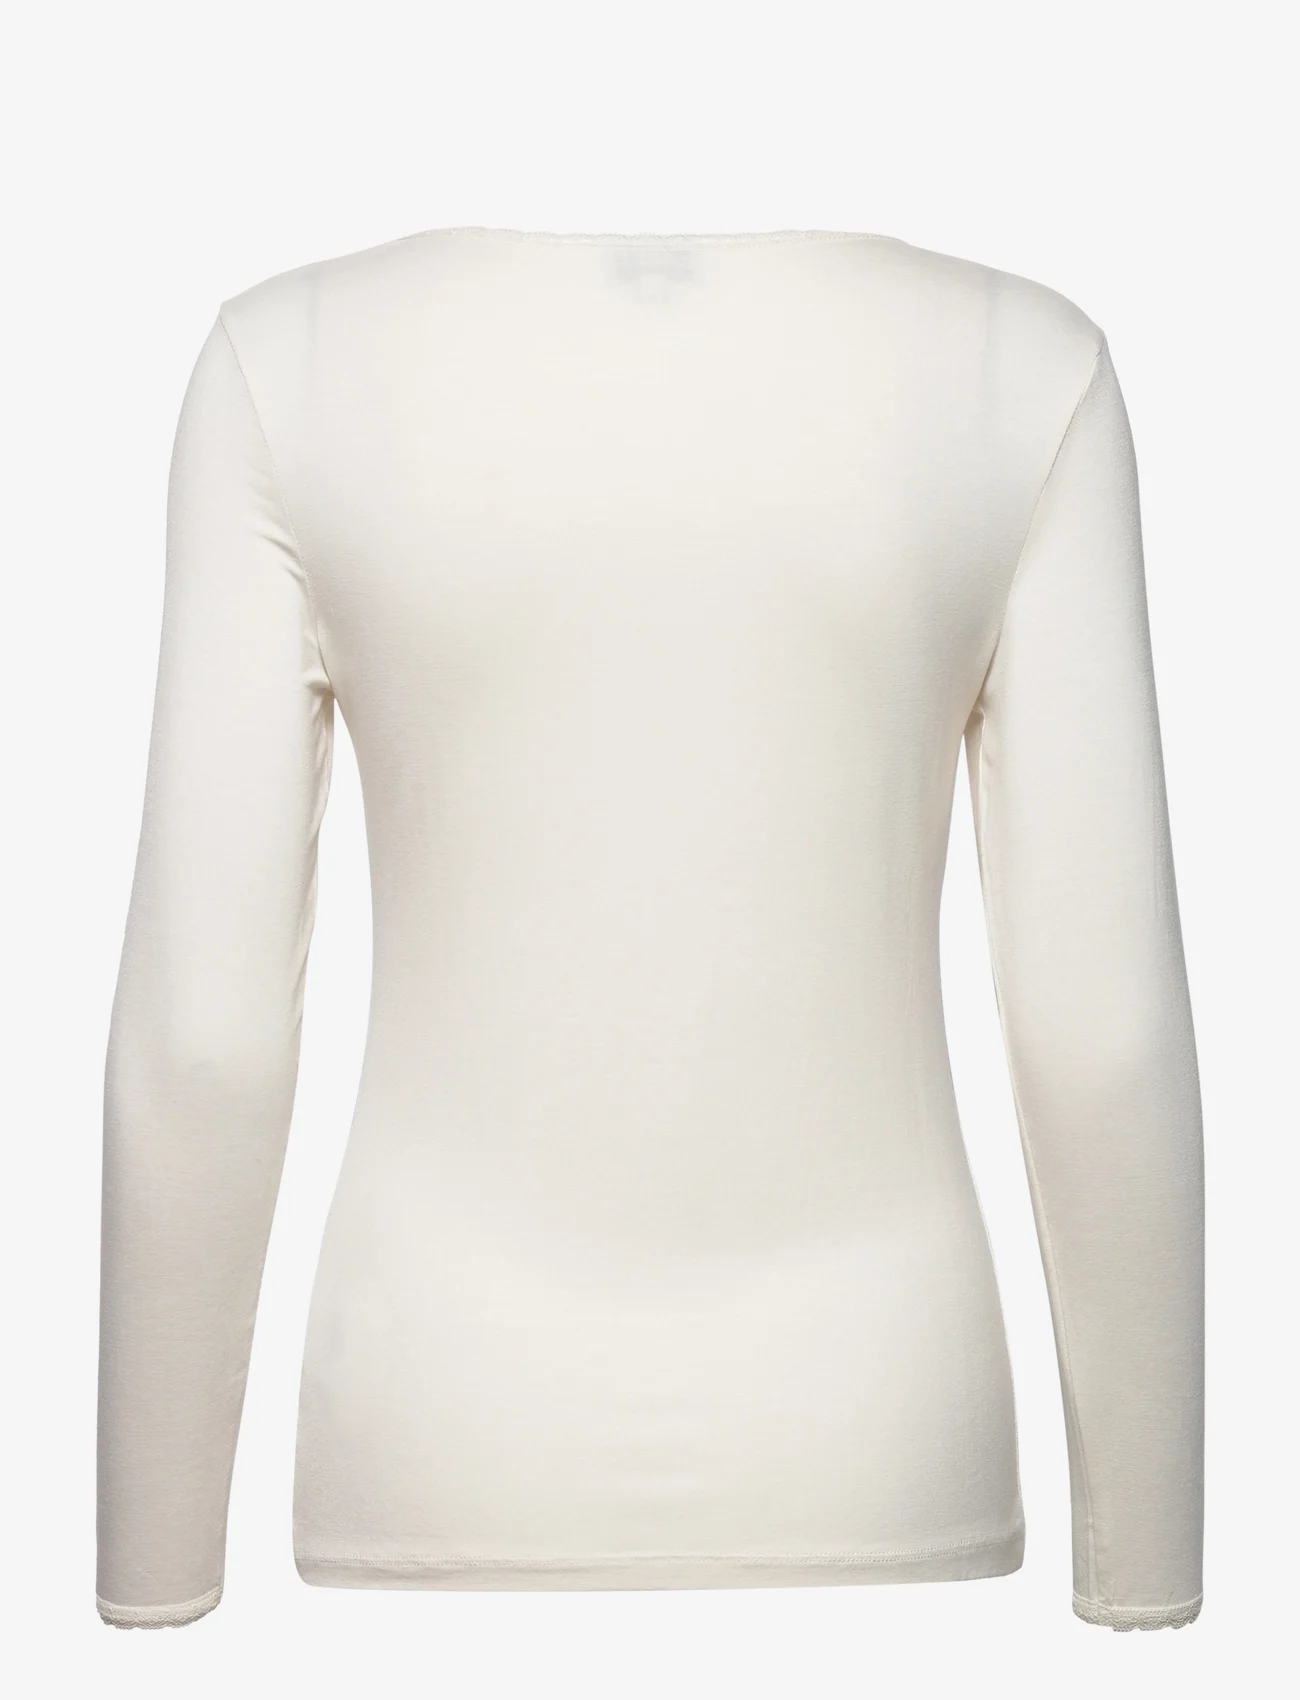 Noa Noa - AlmaNN T-Shirt Long Sleeve - långärmade toppar - white - 1